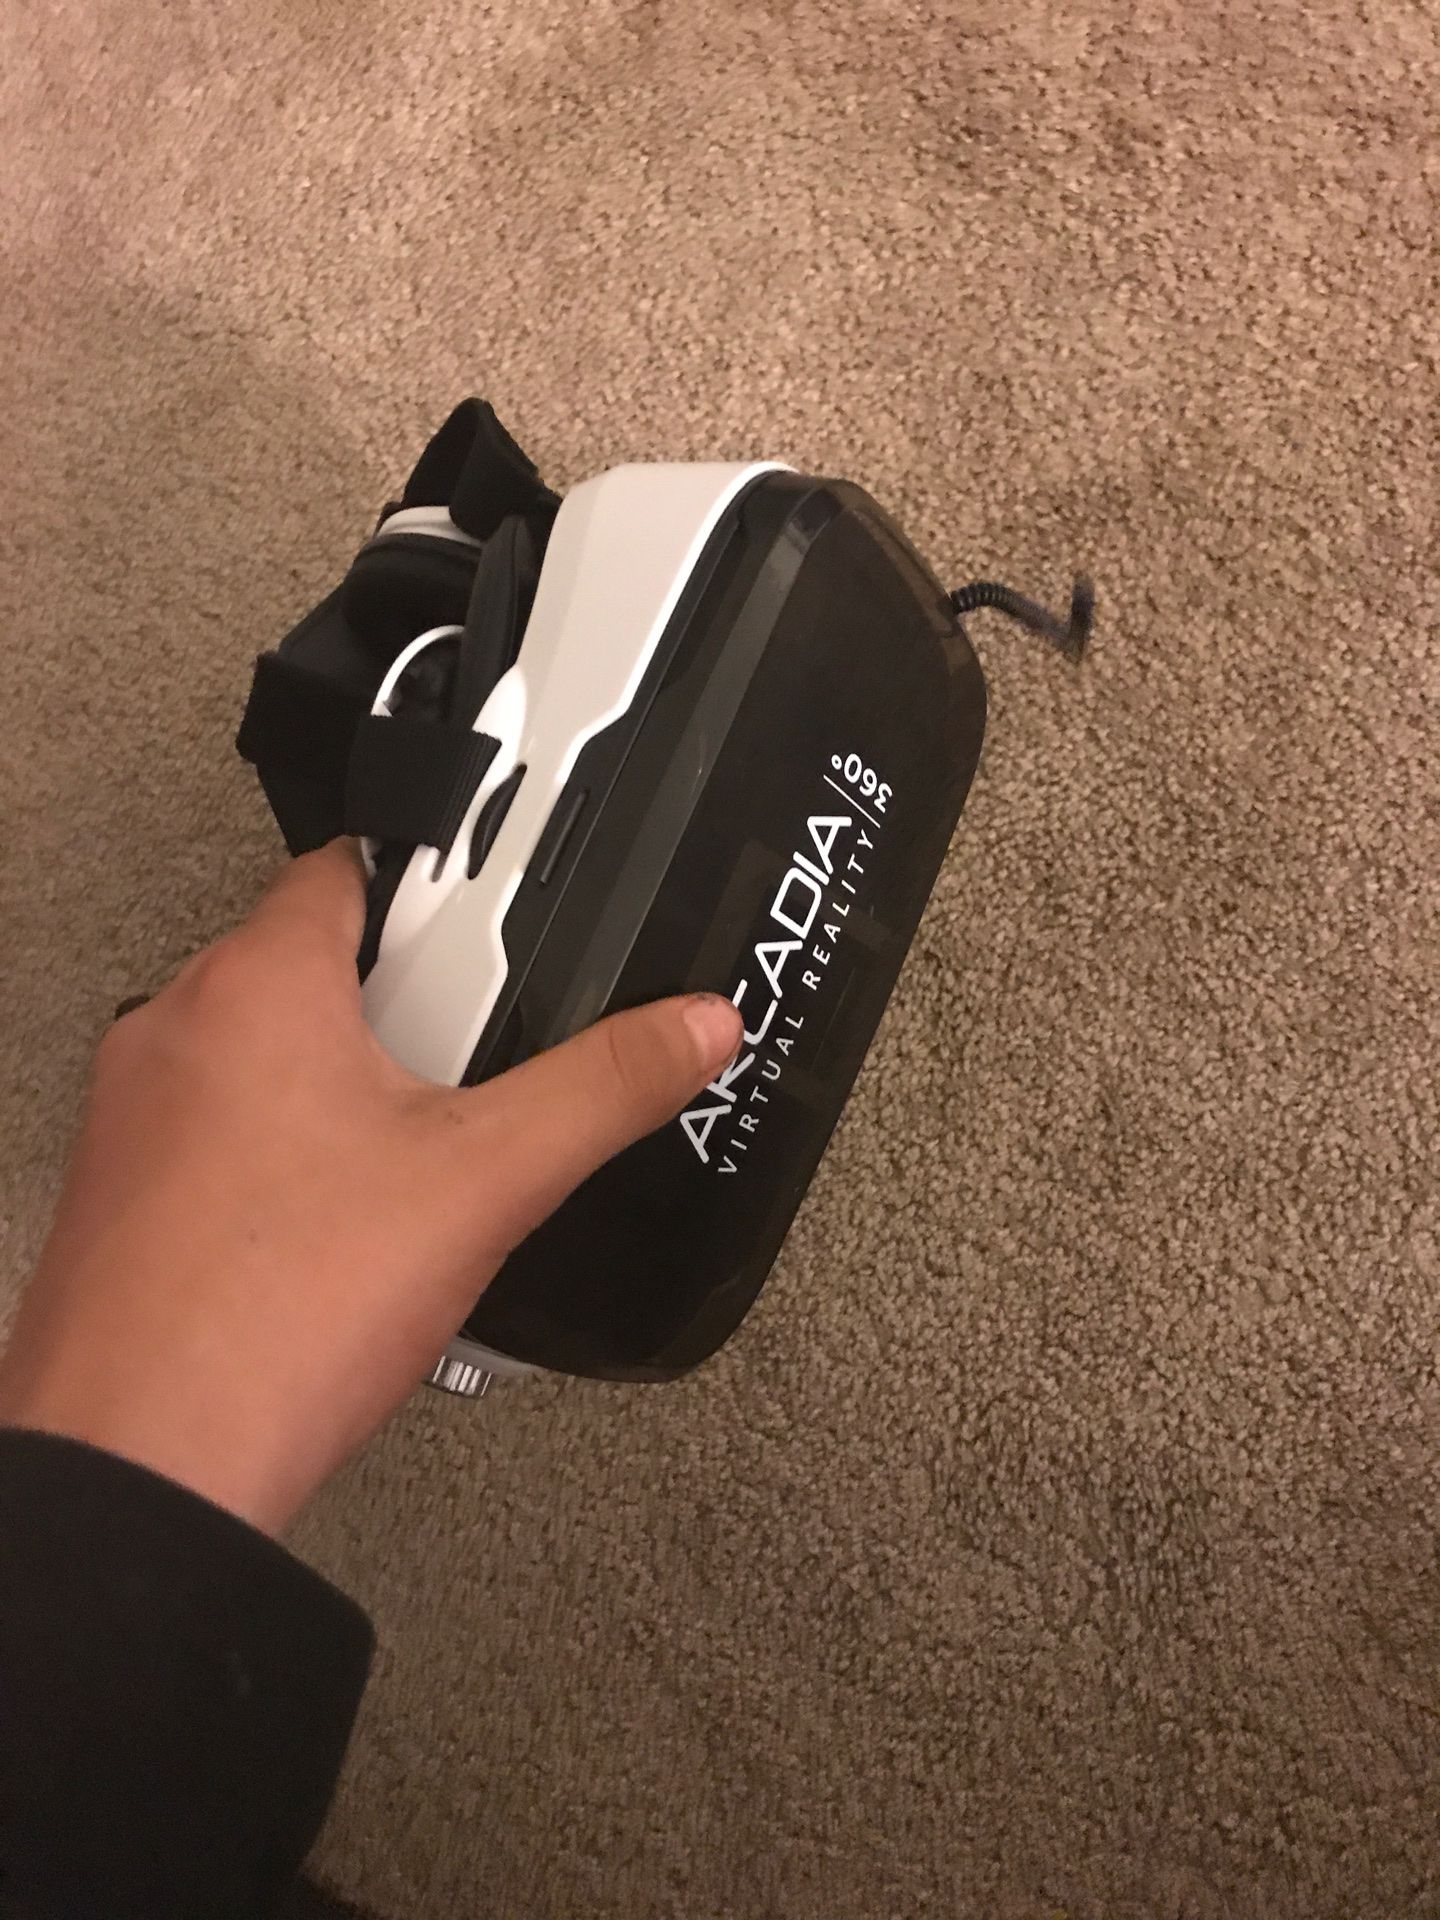 Arcadia VR goggles